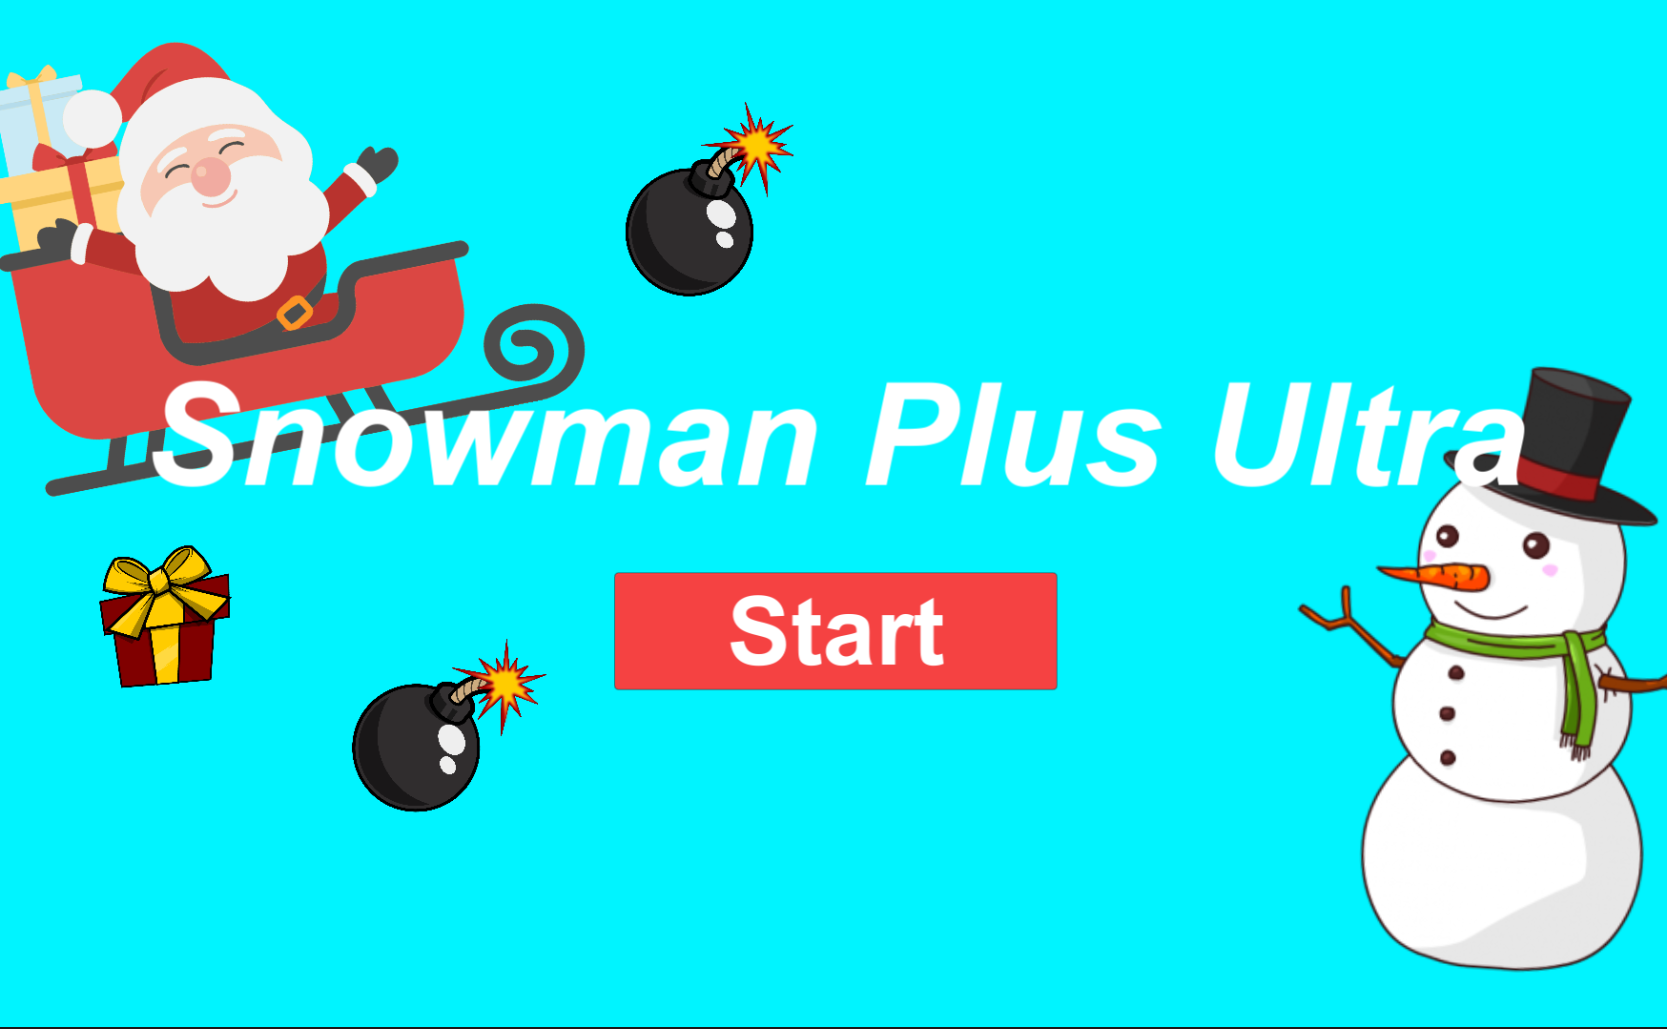 Snowman Plus Ultra! by coder403